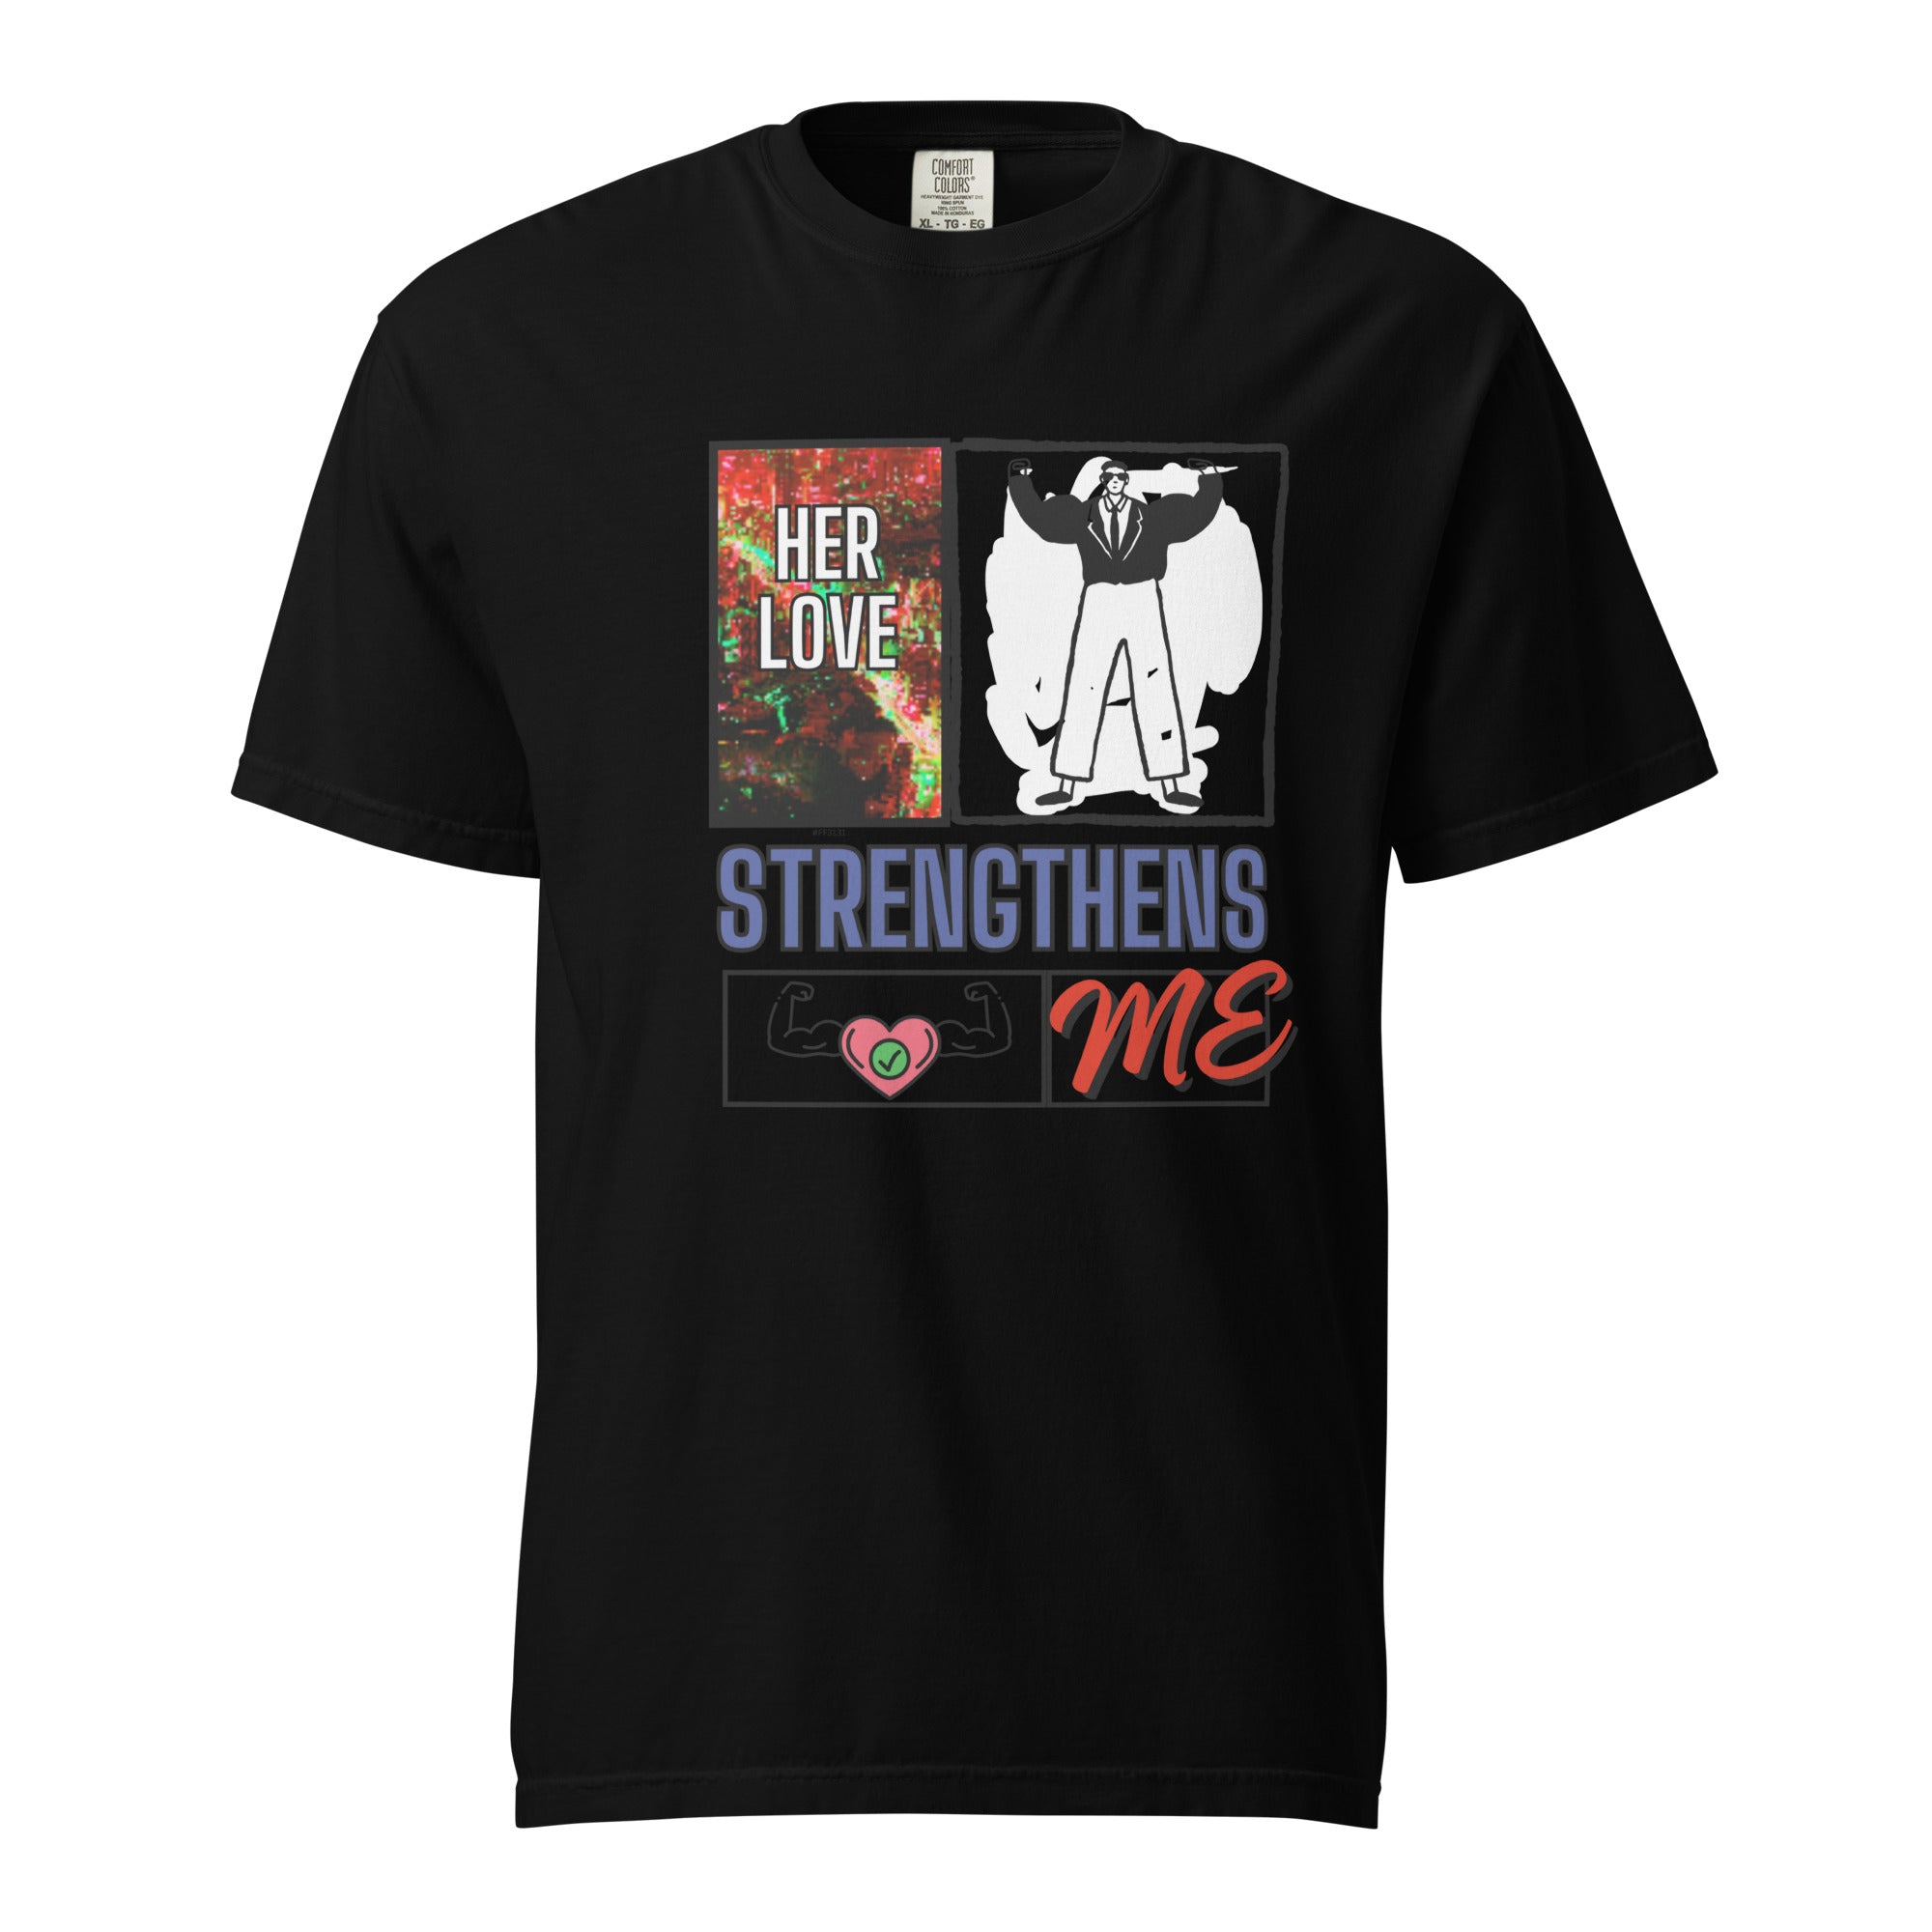 Her love strengthens Unsex t-shirt